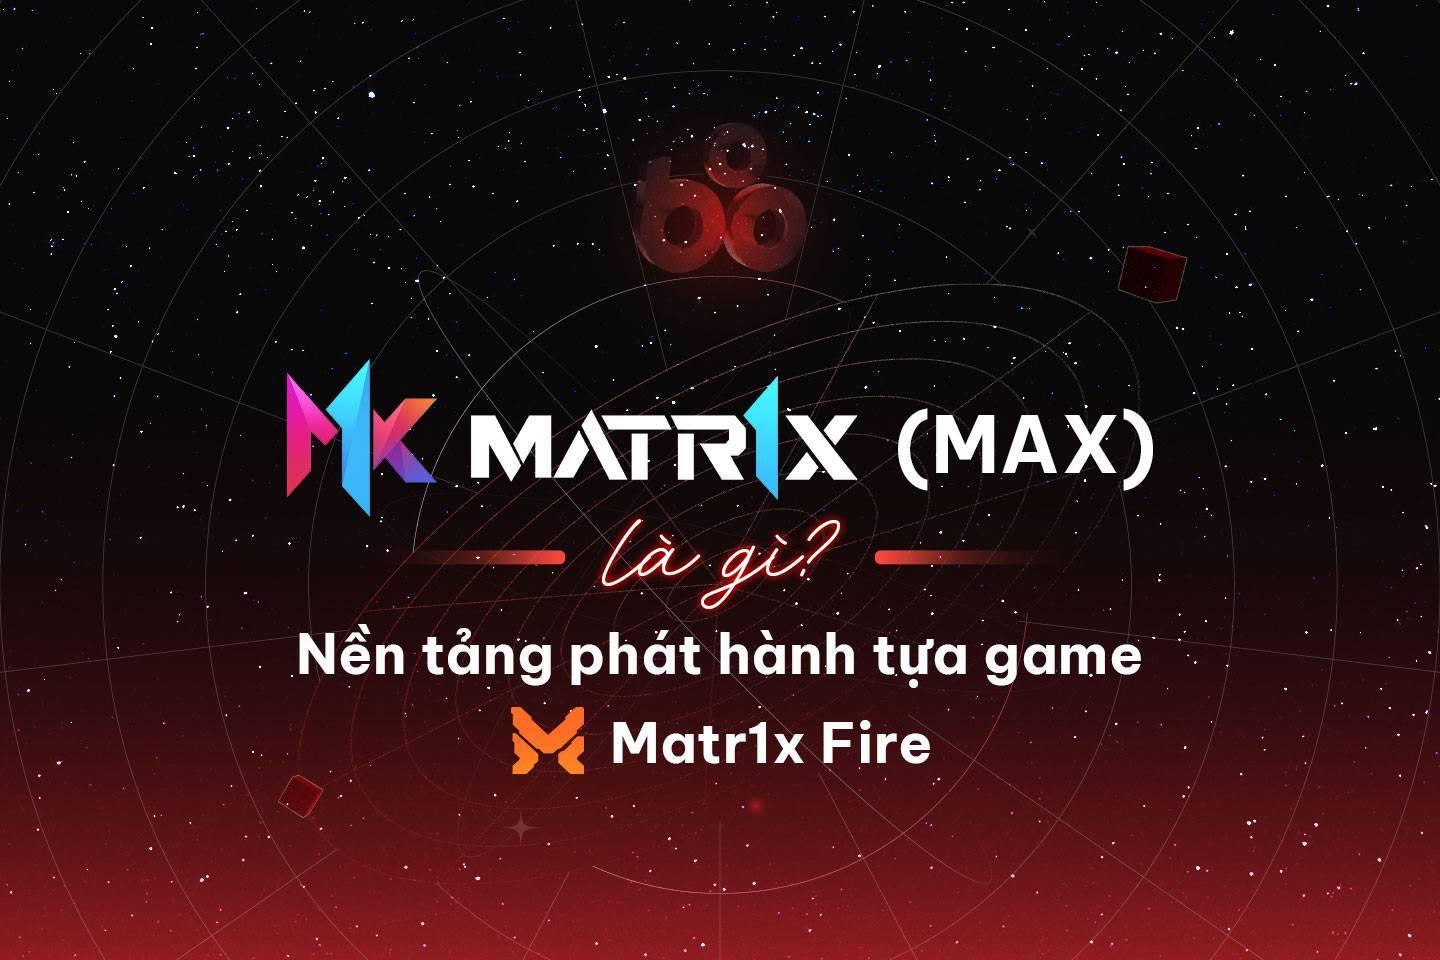 matr1x-max-la-gi-nen-tang-phat-hanh-tua-game-matr1x-fire